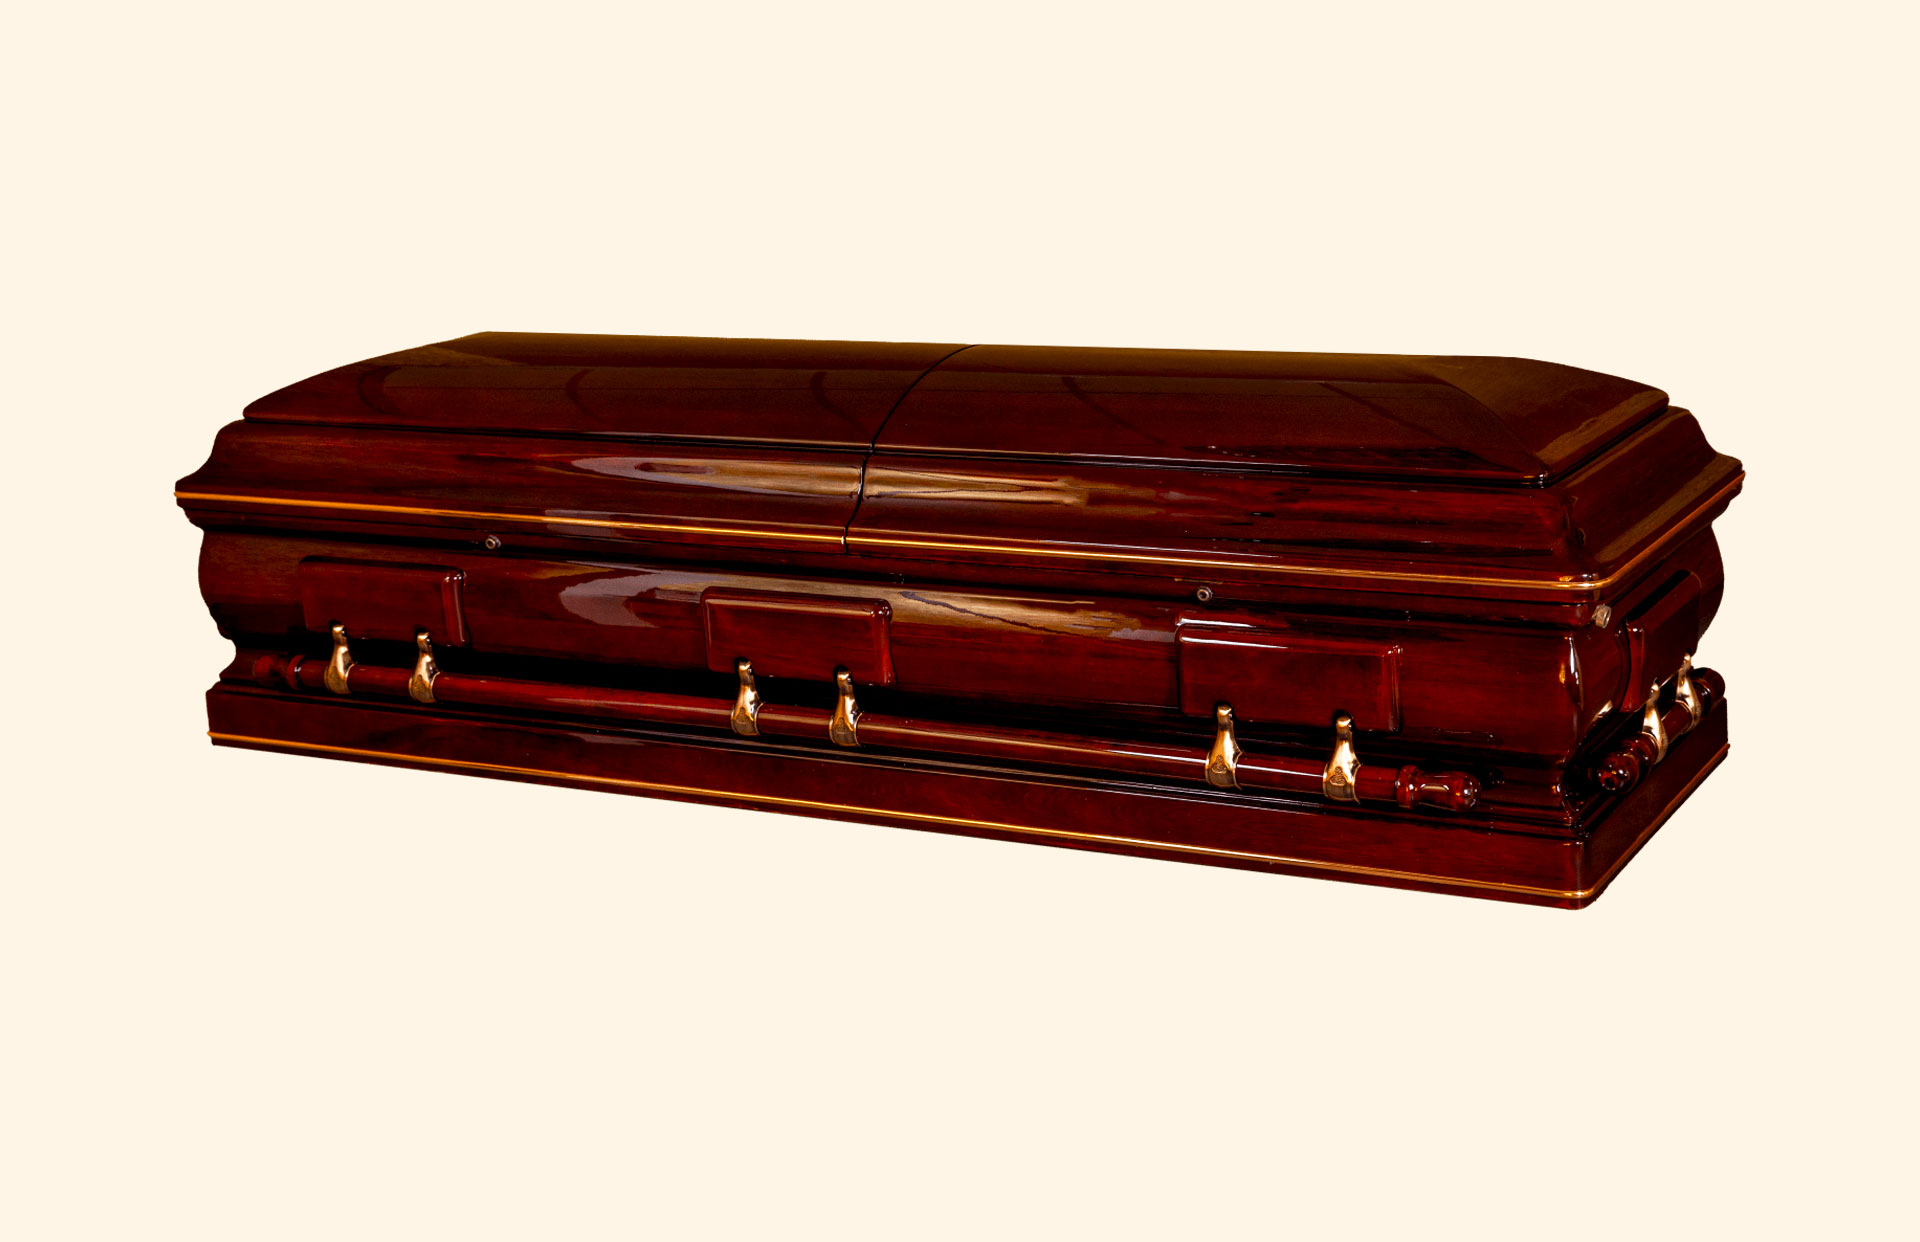 Royal American casket